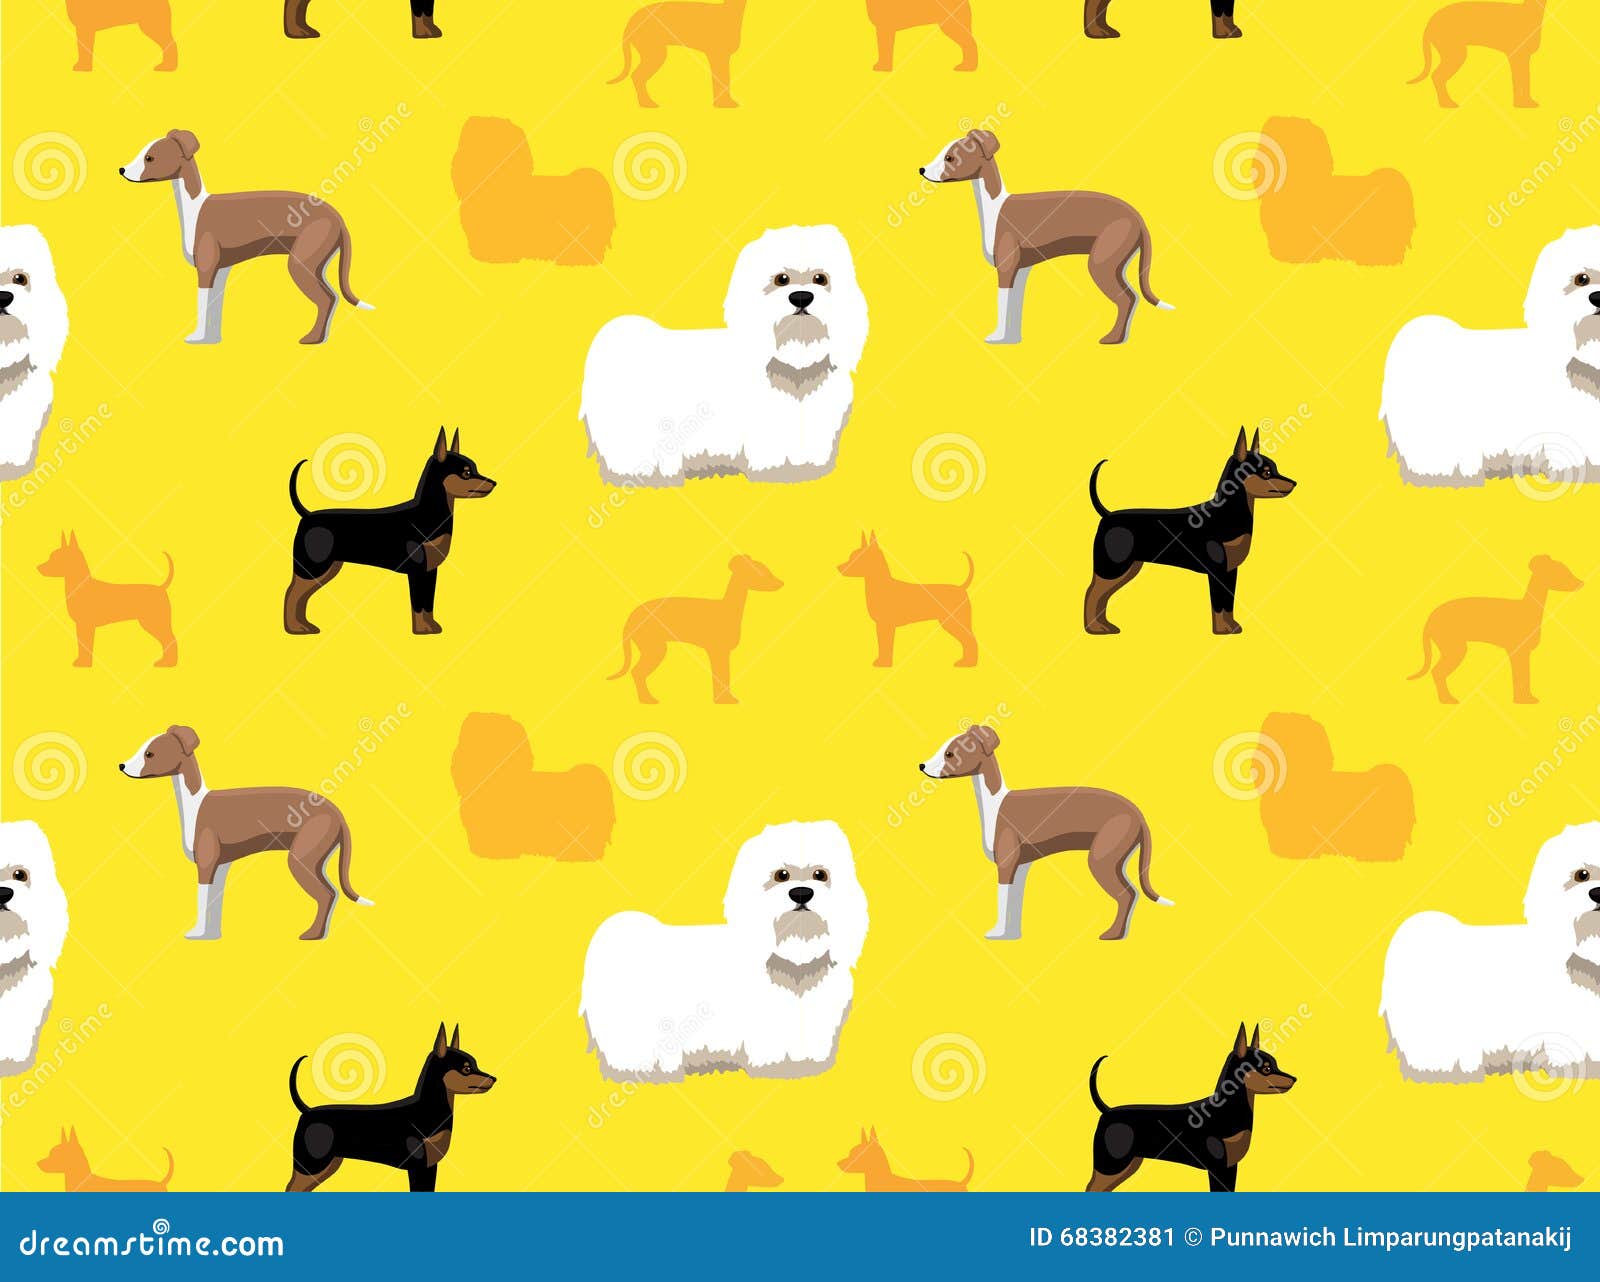 Dog Wallpaper 5 stock vector. Illustration of character - 68382381